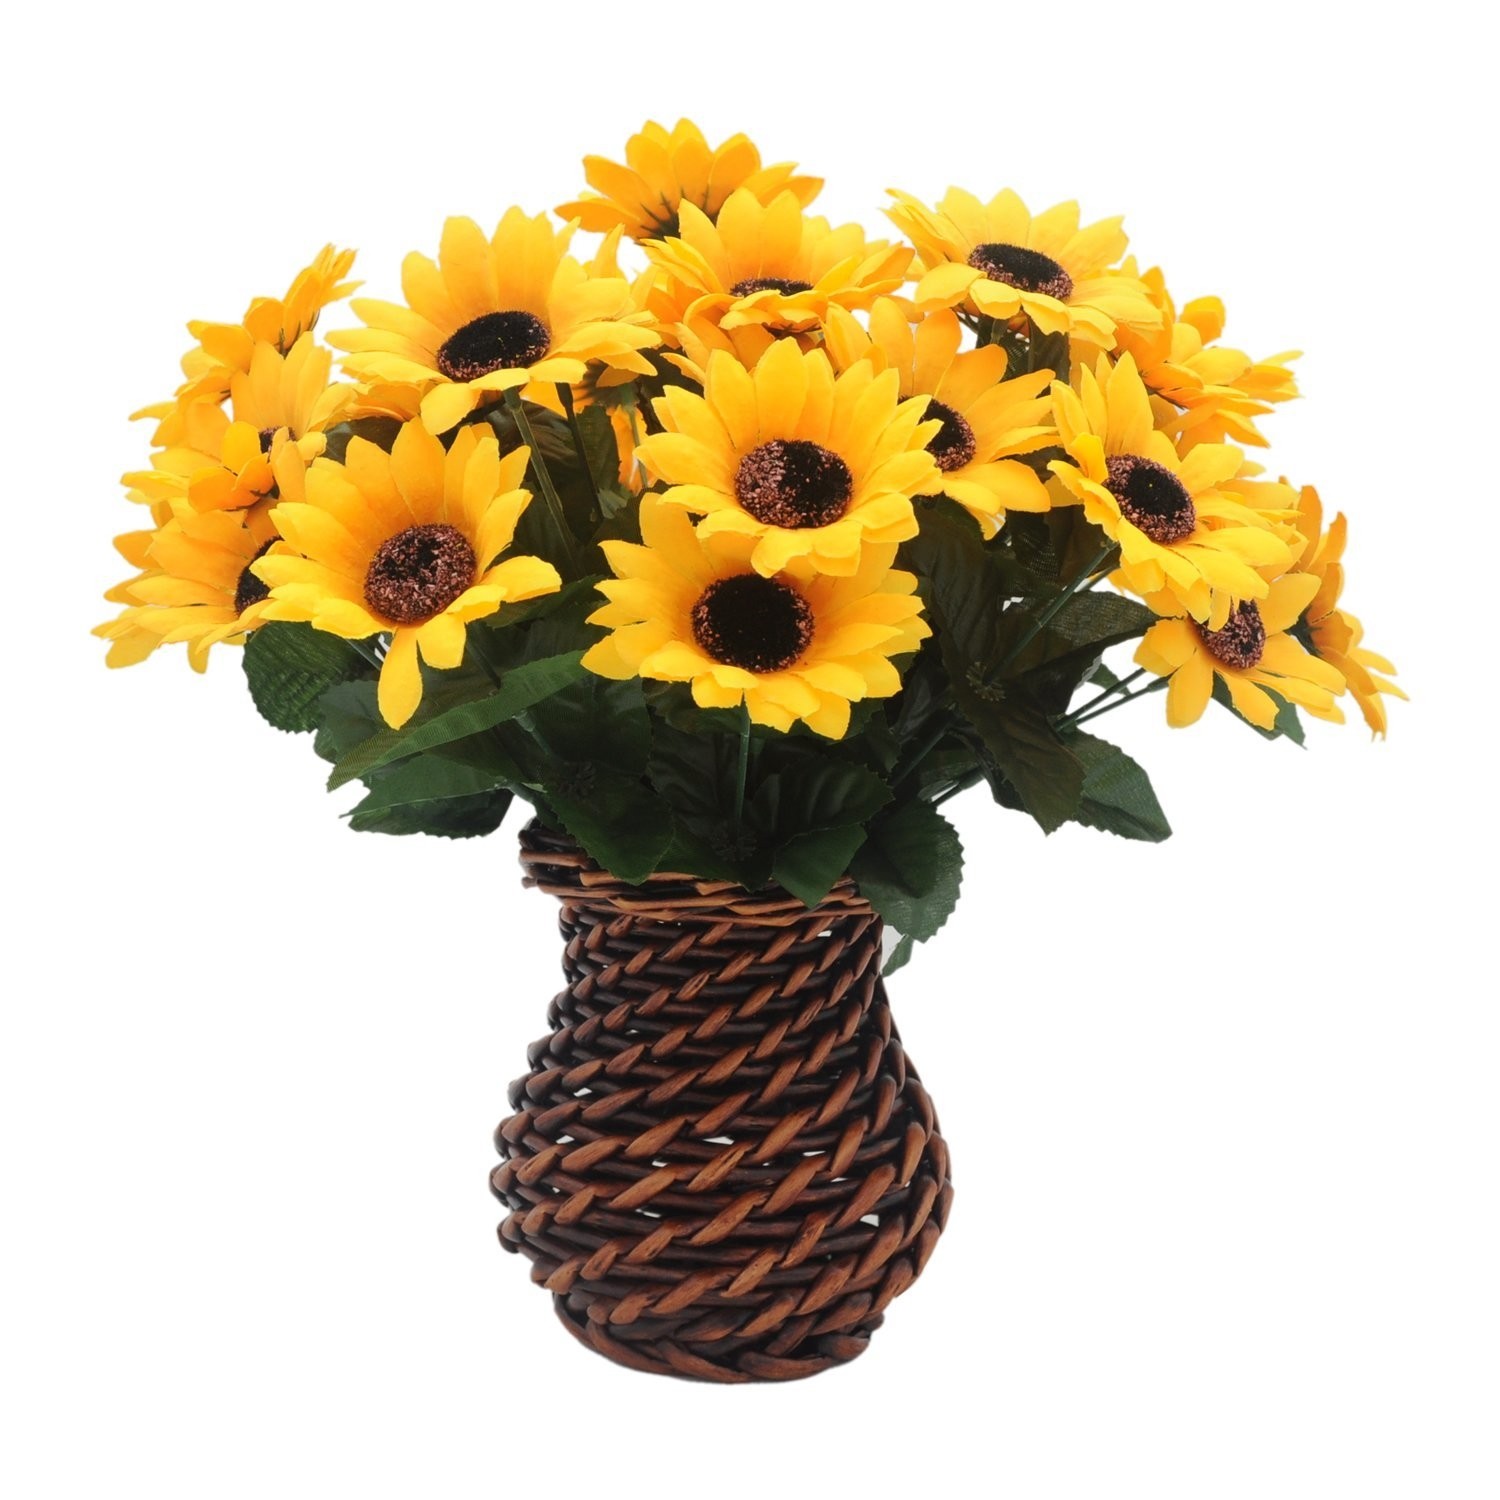 Velener artificial silk daisy sunflowers arrangements with